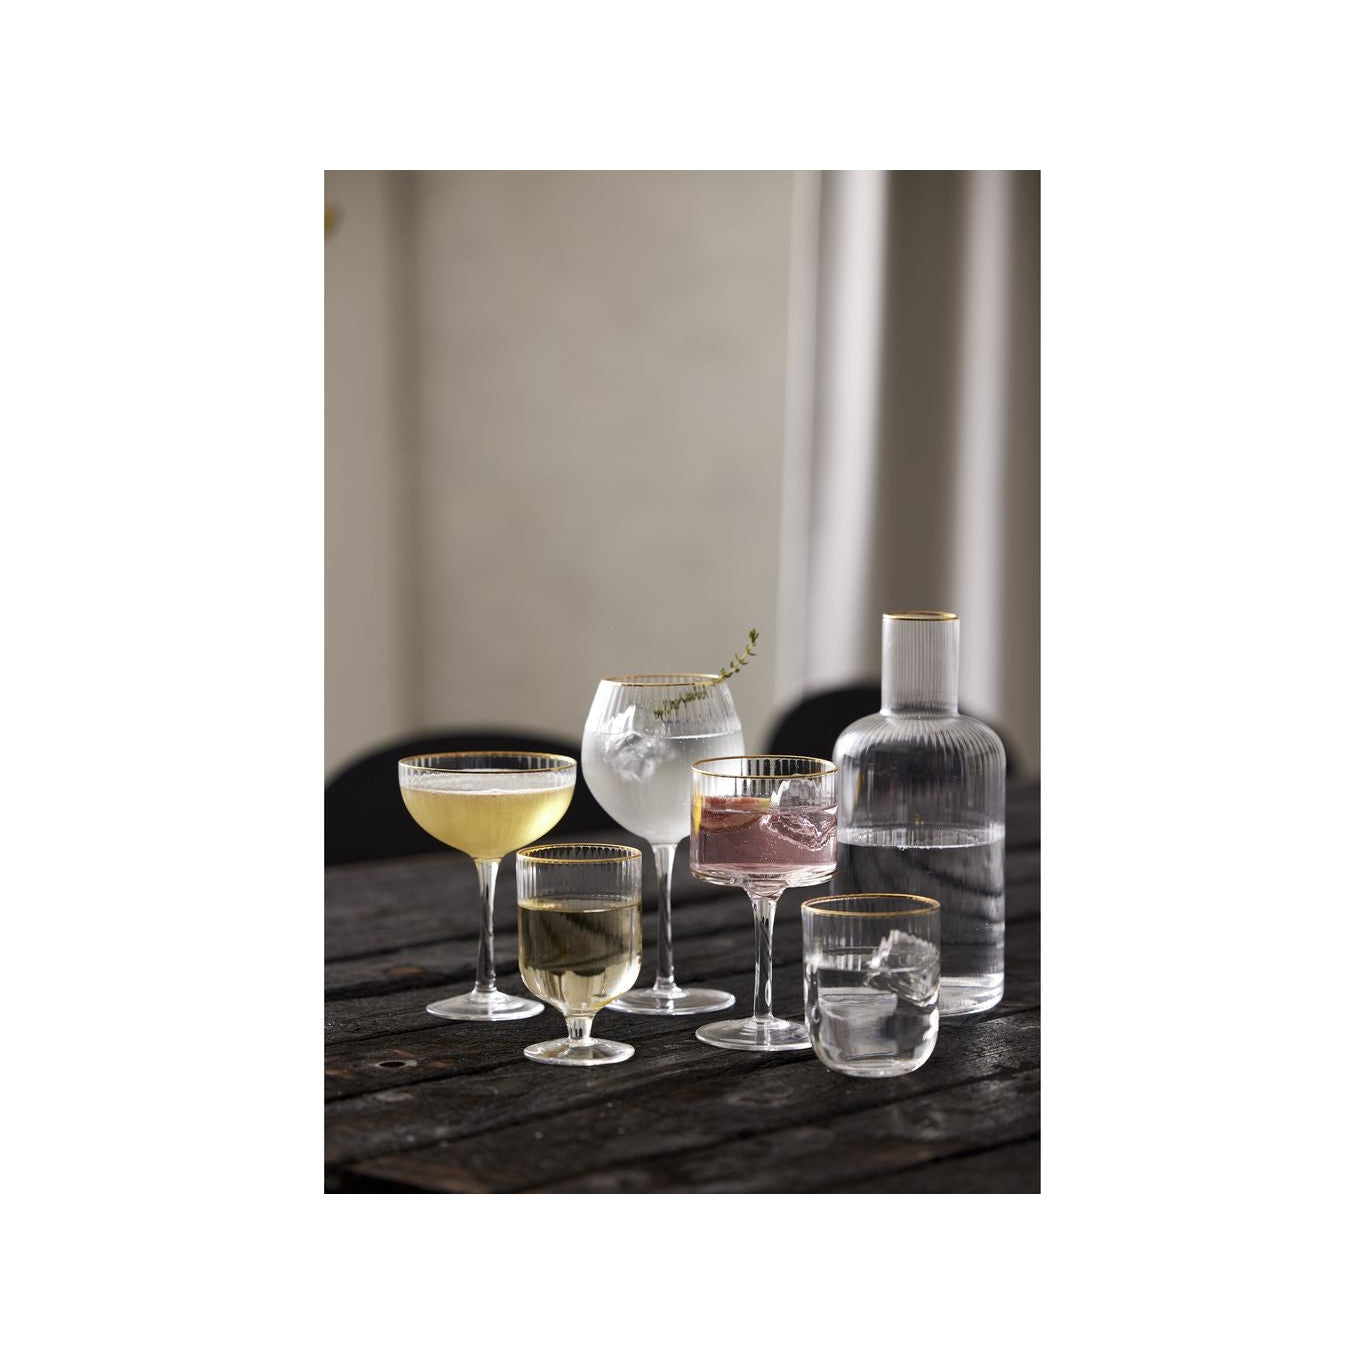 Lyngby Glas Palermo Gold Wine Glass 30 Cl, 4 stk.